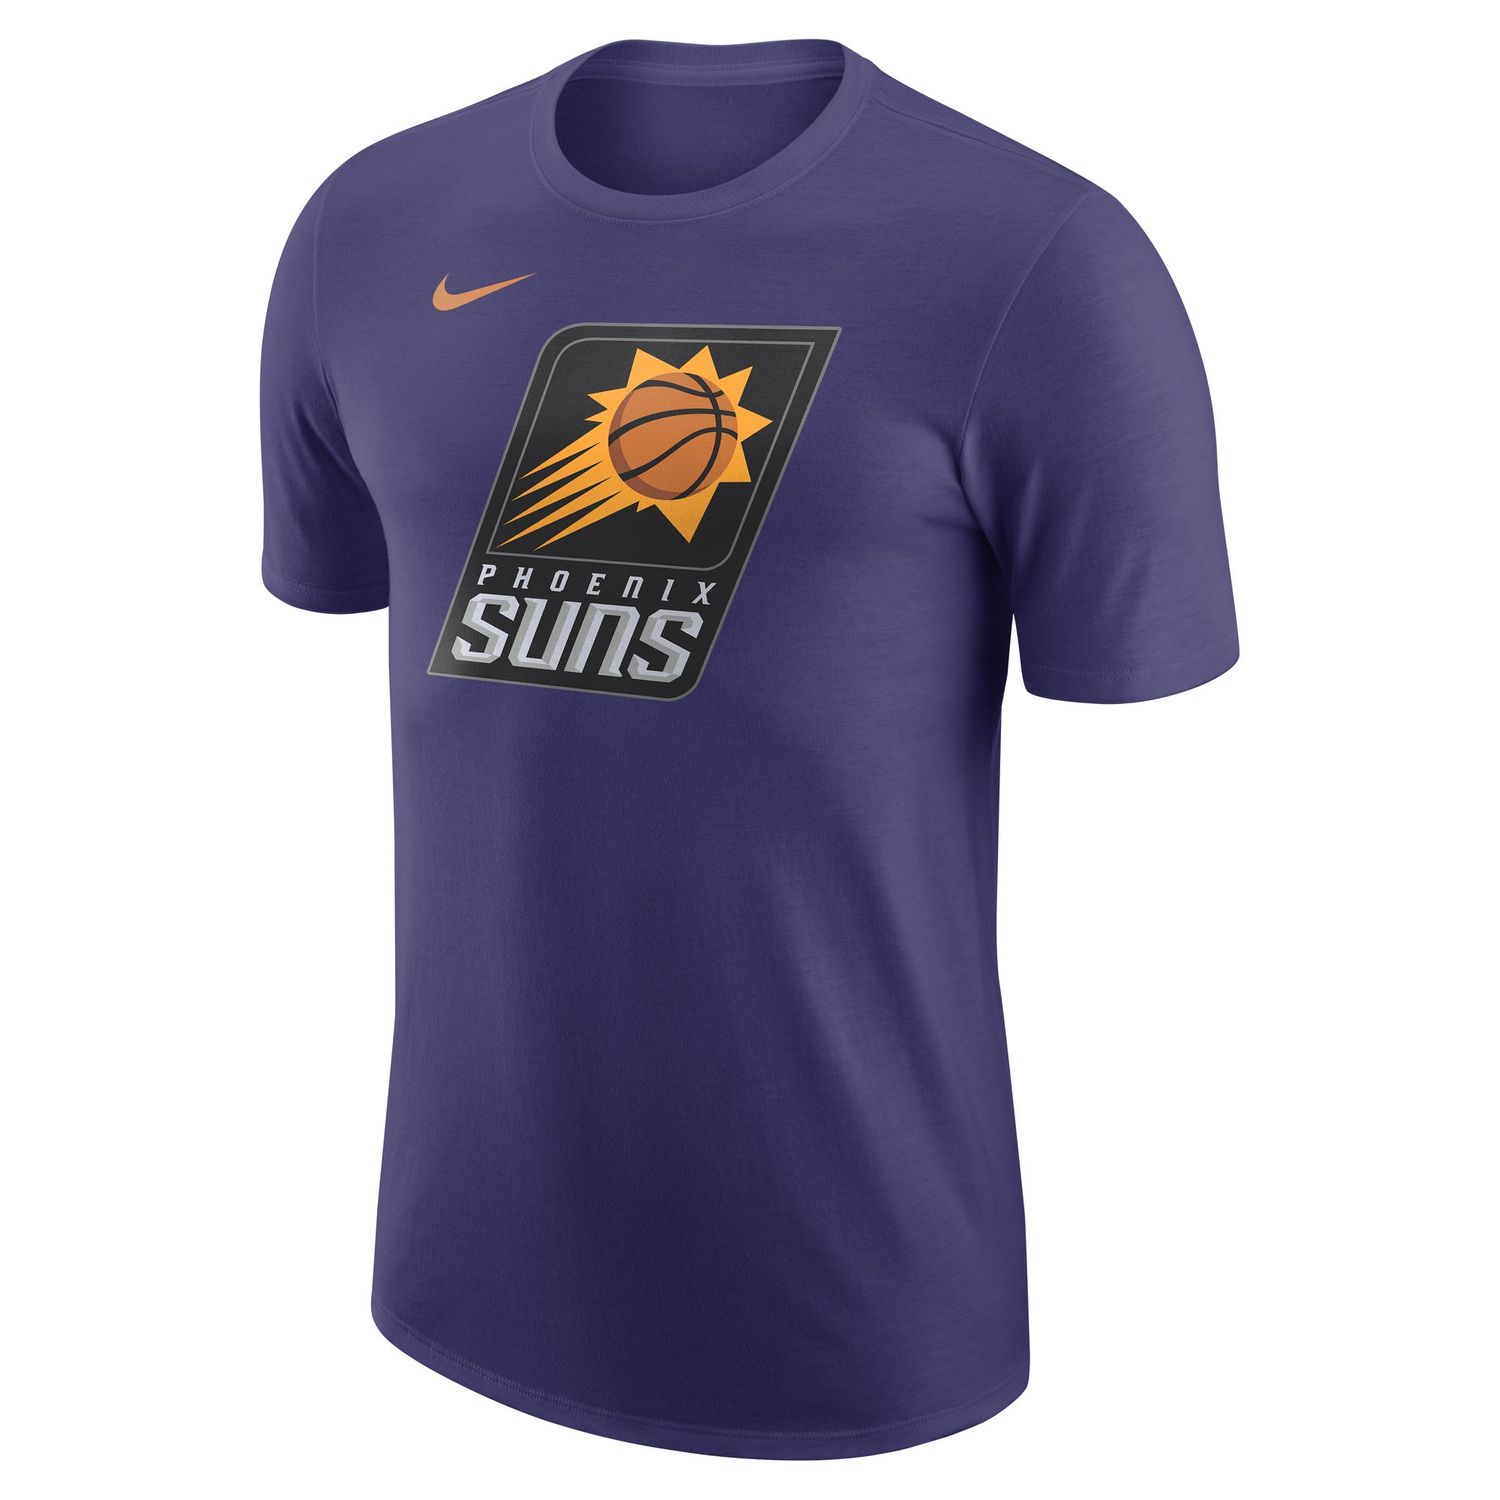 Nike NBA Phoenix Suns Essential T-Shirt